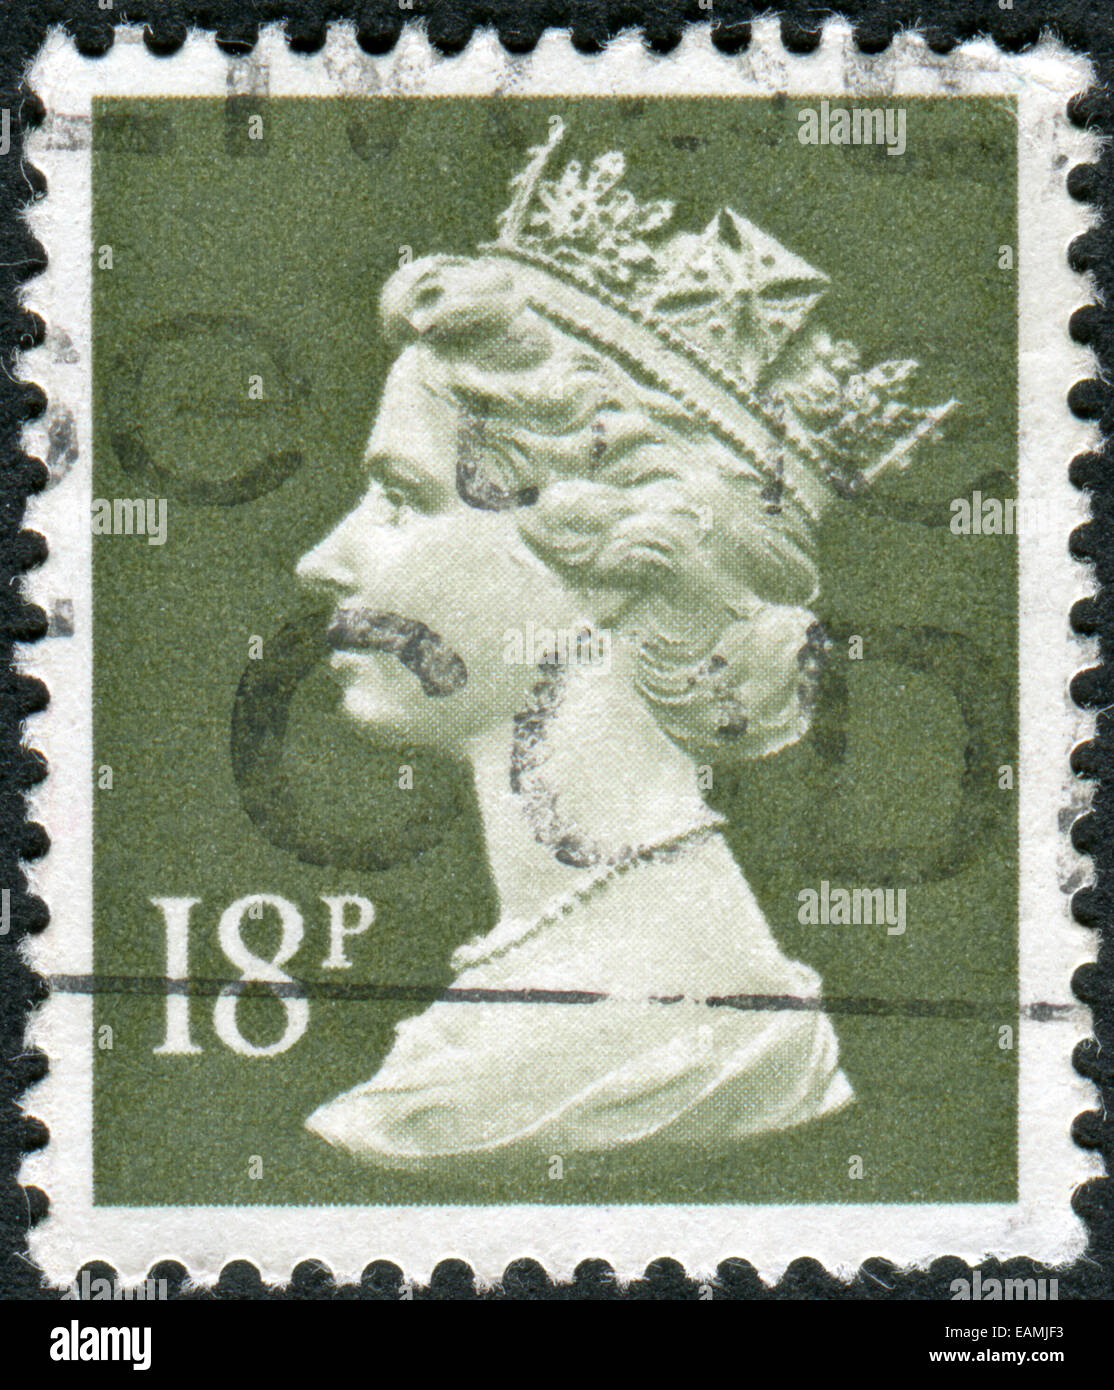 UNITED KINGDOM - CIRCA 1984: Postage stamp printed in England, shows a portrait of Queen Elizabeth II, circa 1984 Stock Photo